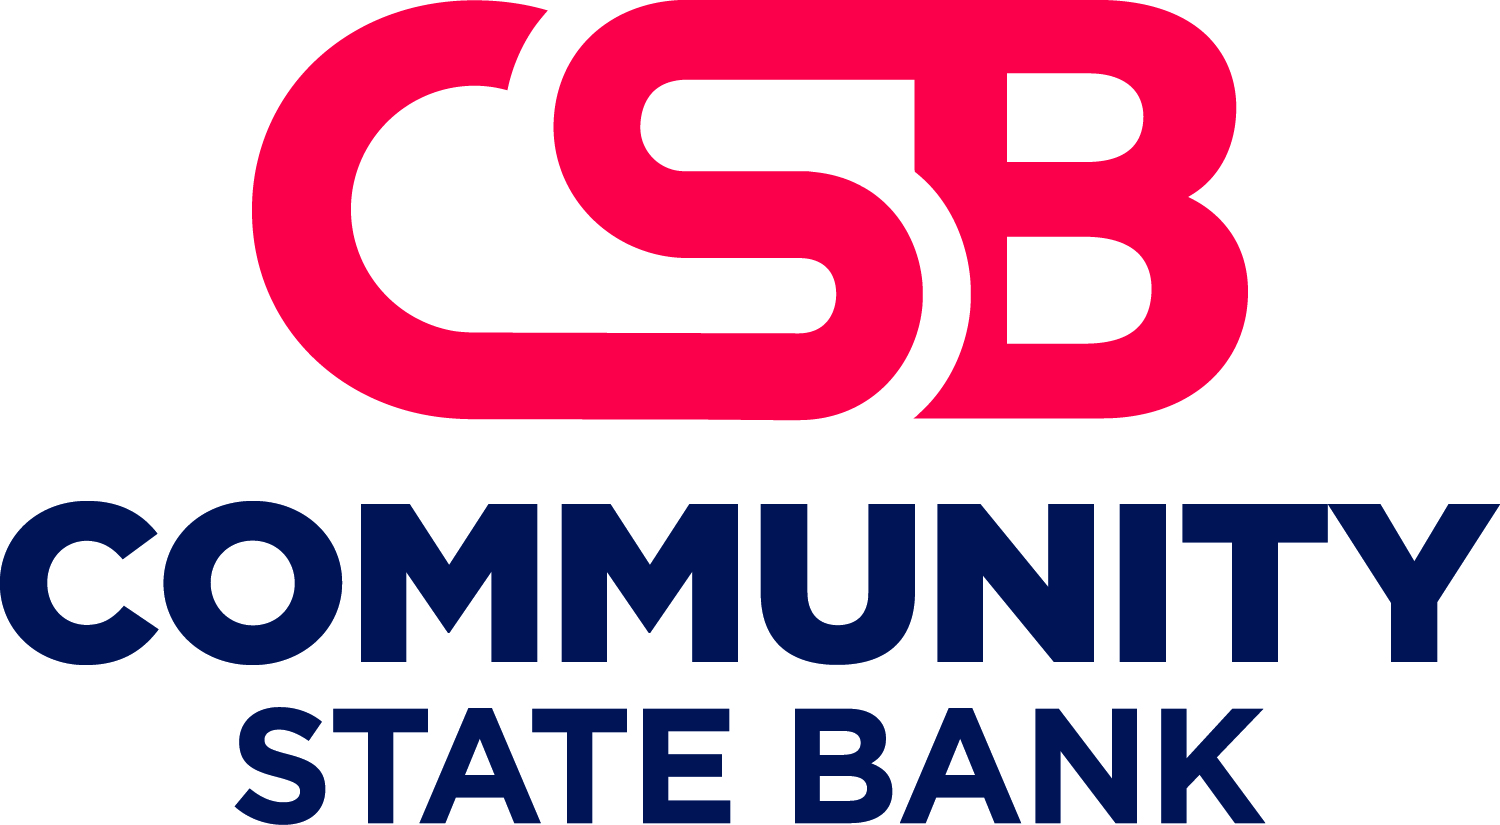 Csb logo fullcolor pms192c pms2767c